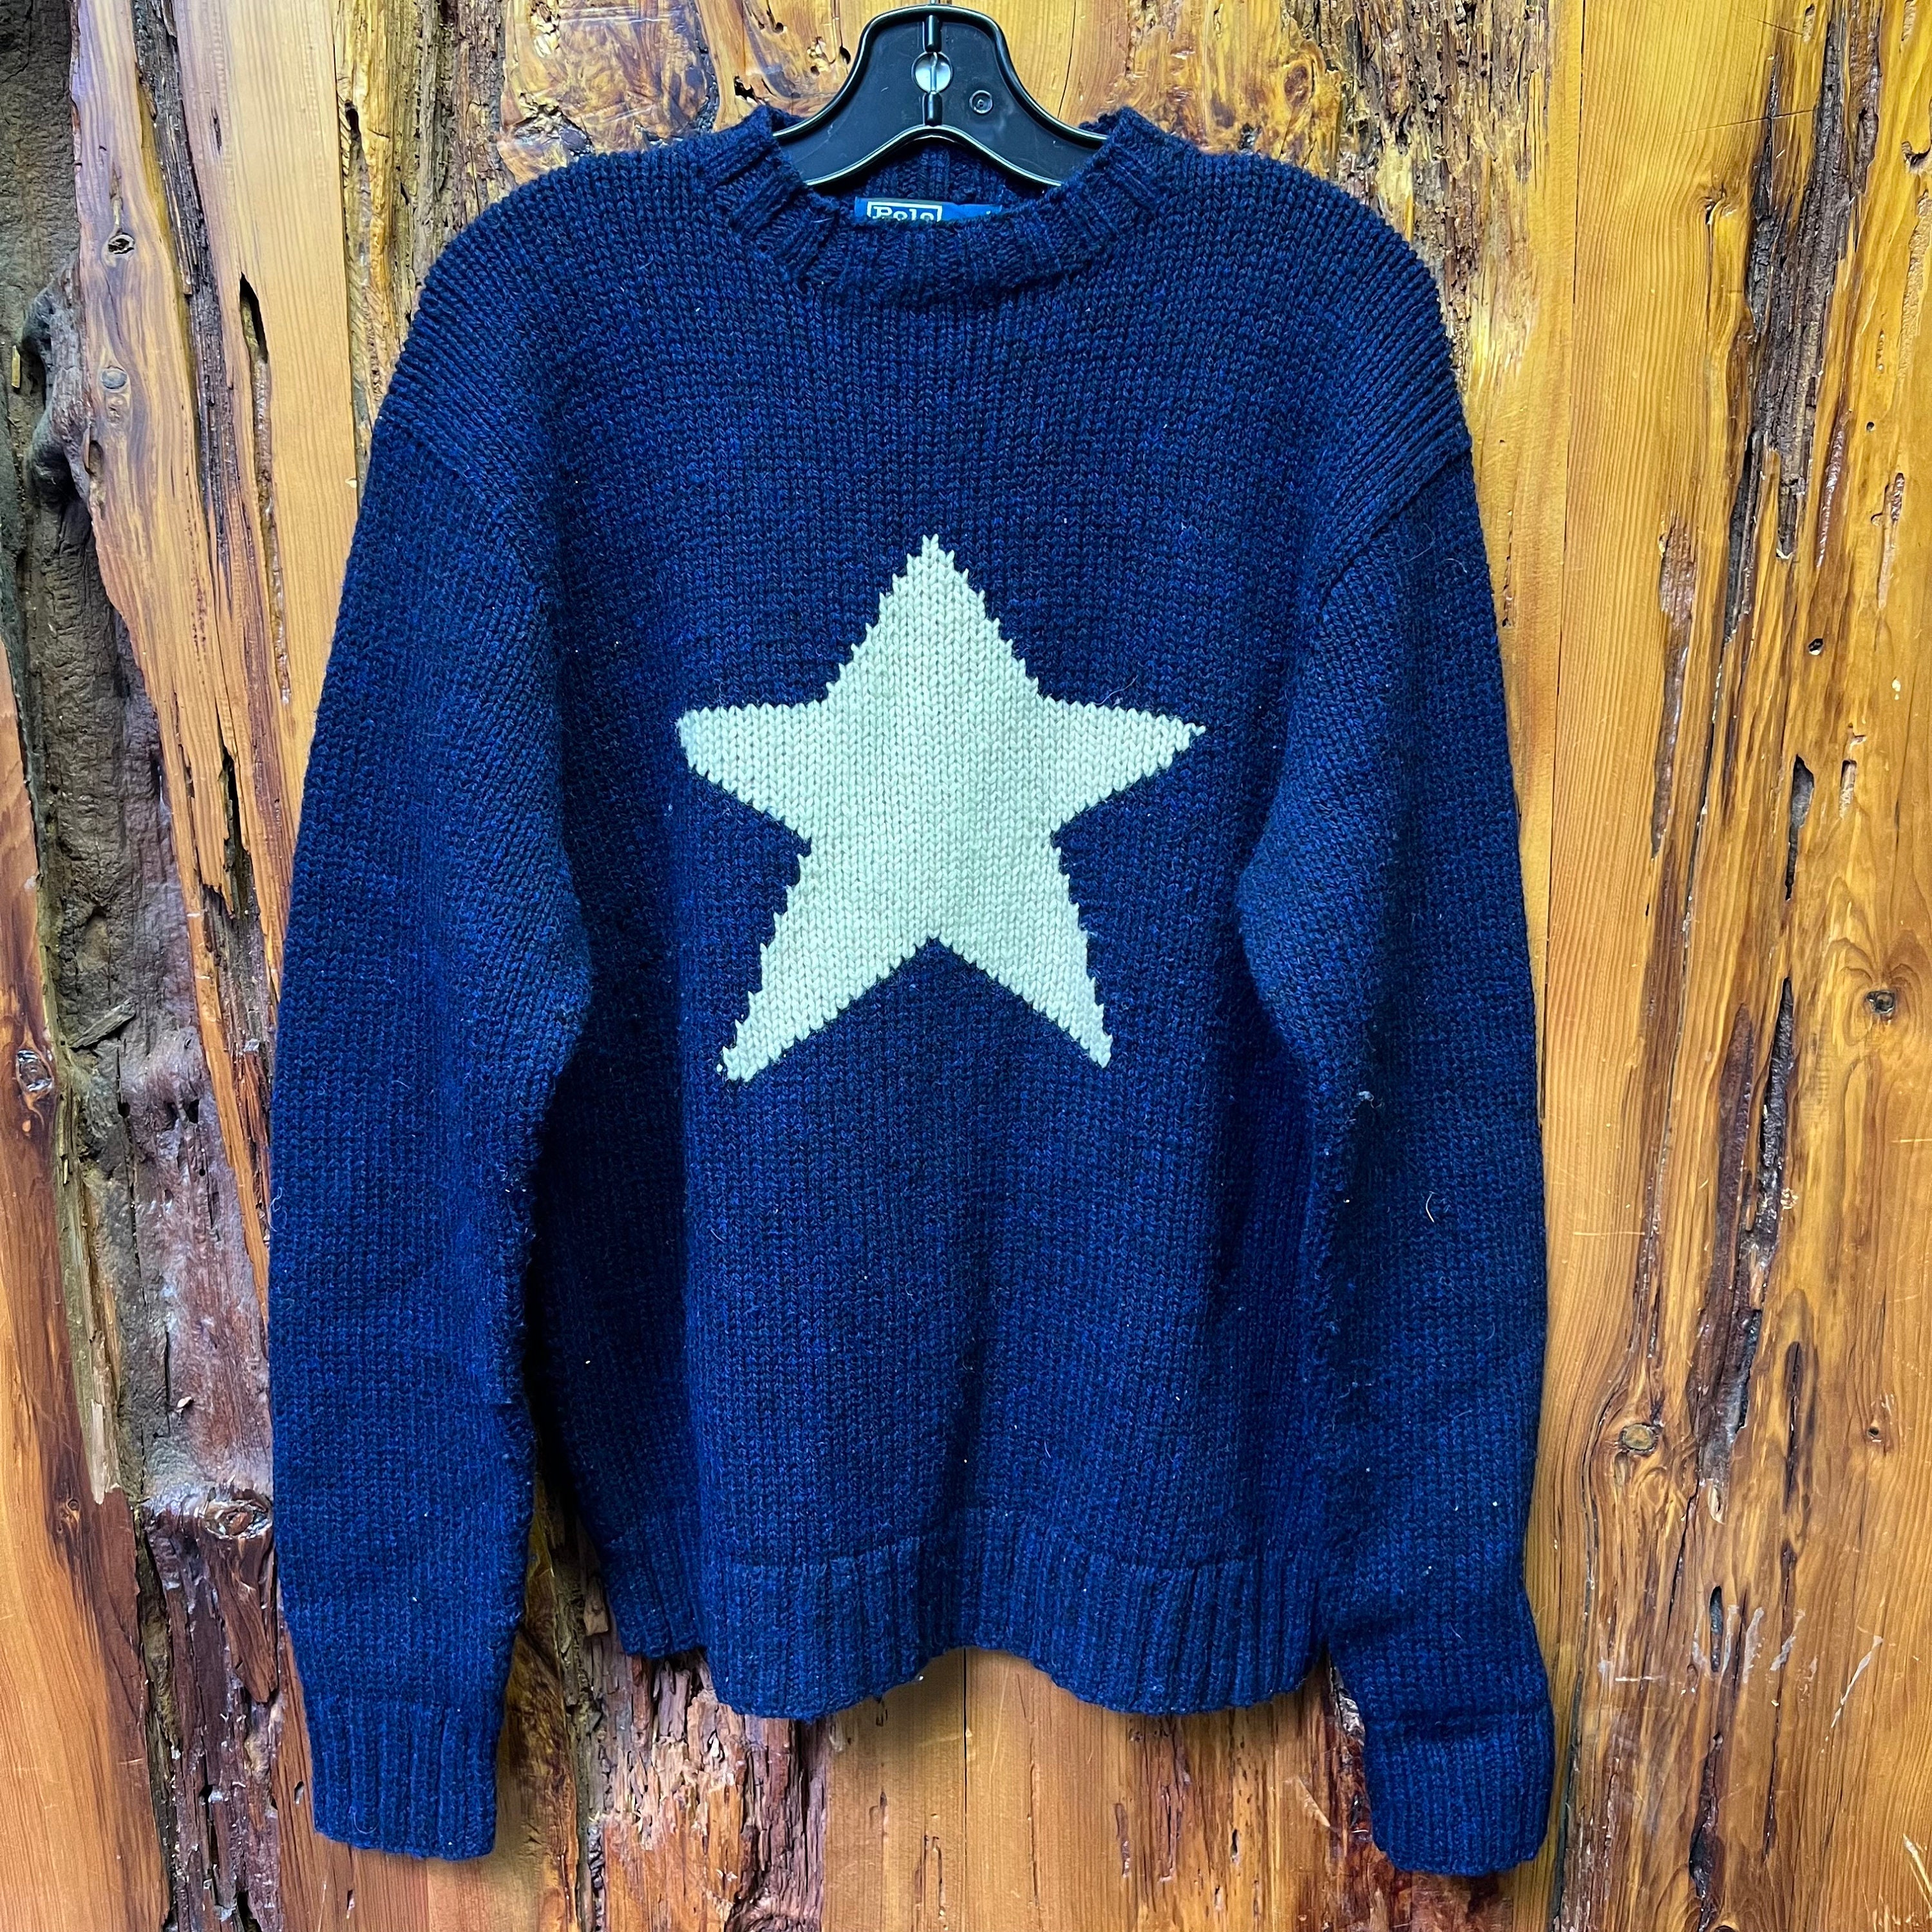 Vintage 90s Polo Ralph Lauren Star Knit Navy Wool Sweater Size